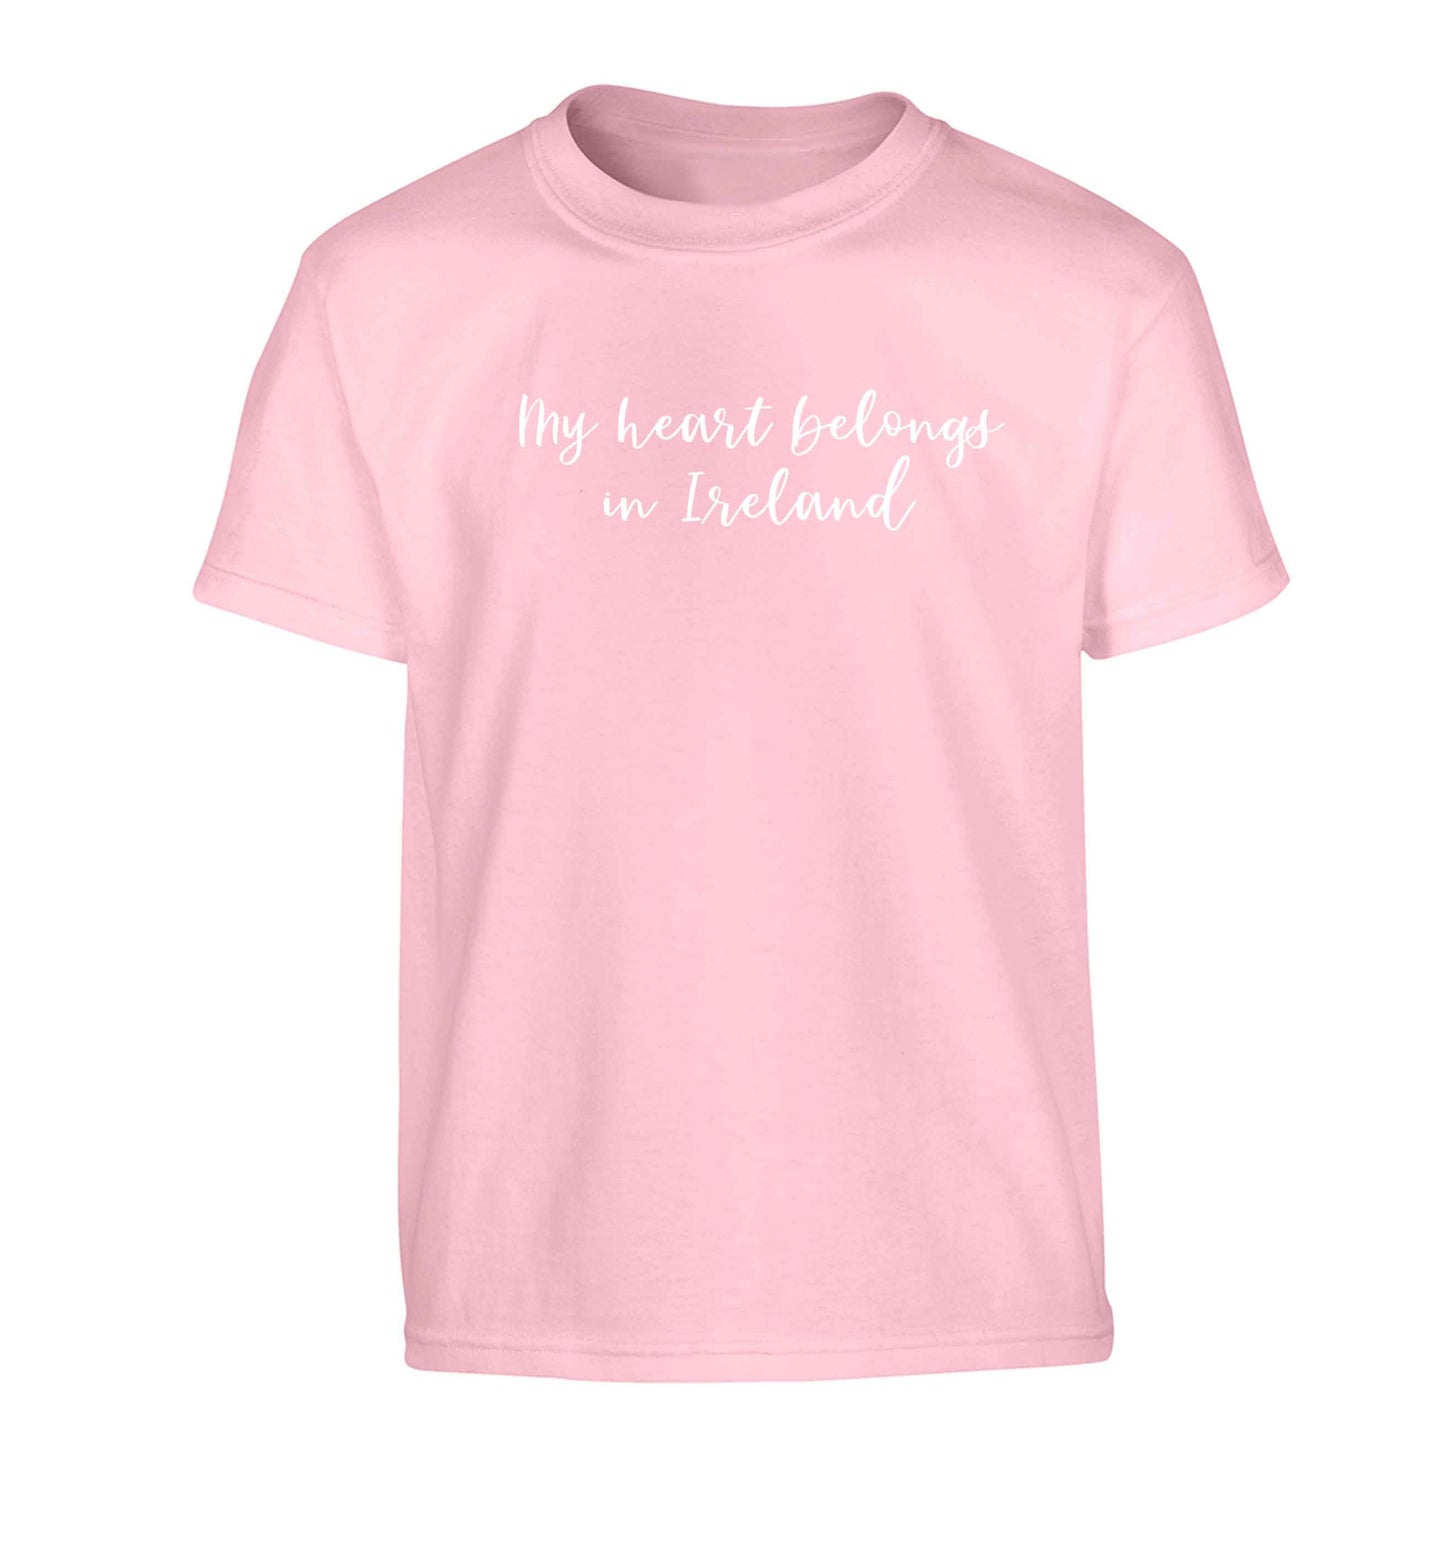 My heart belongs in Ireland Children's light pink Tshirt 12-13 Years